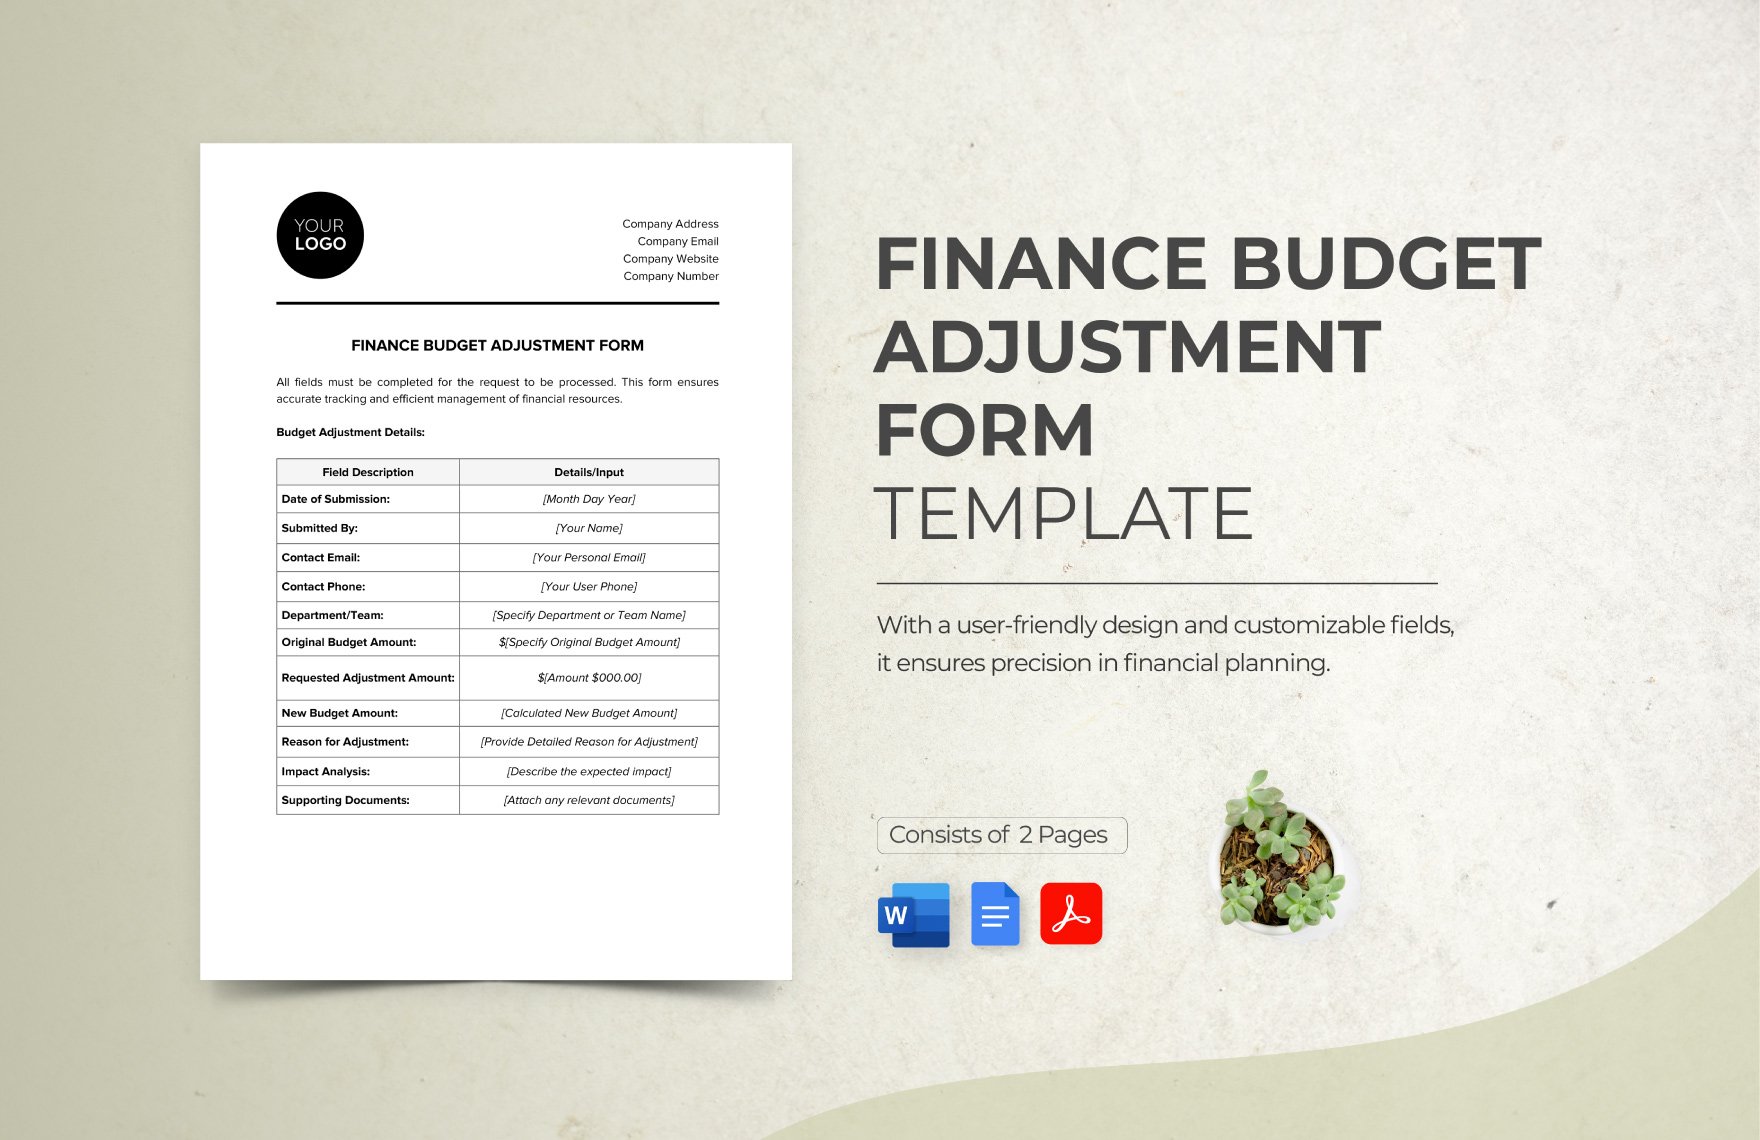 Finance Budget Adjustment Form Template